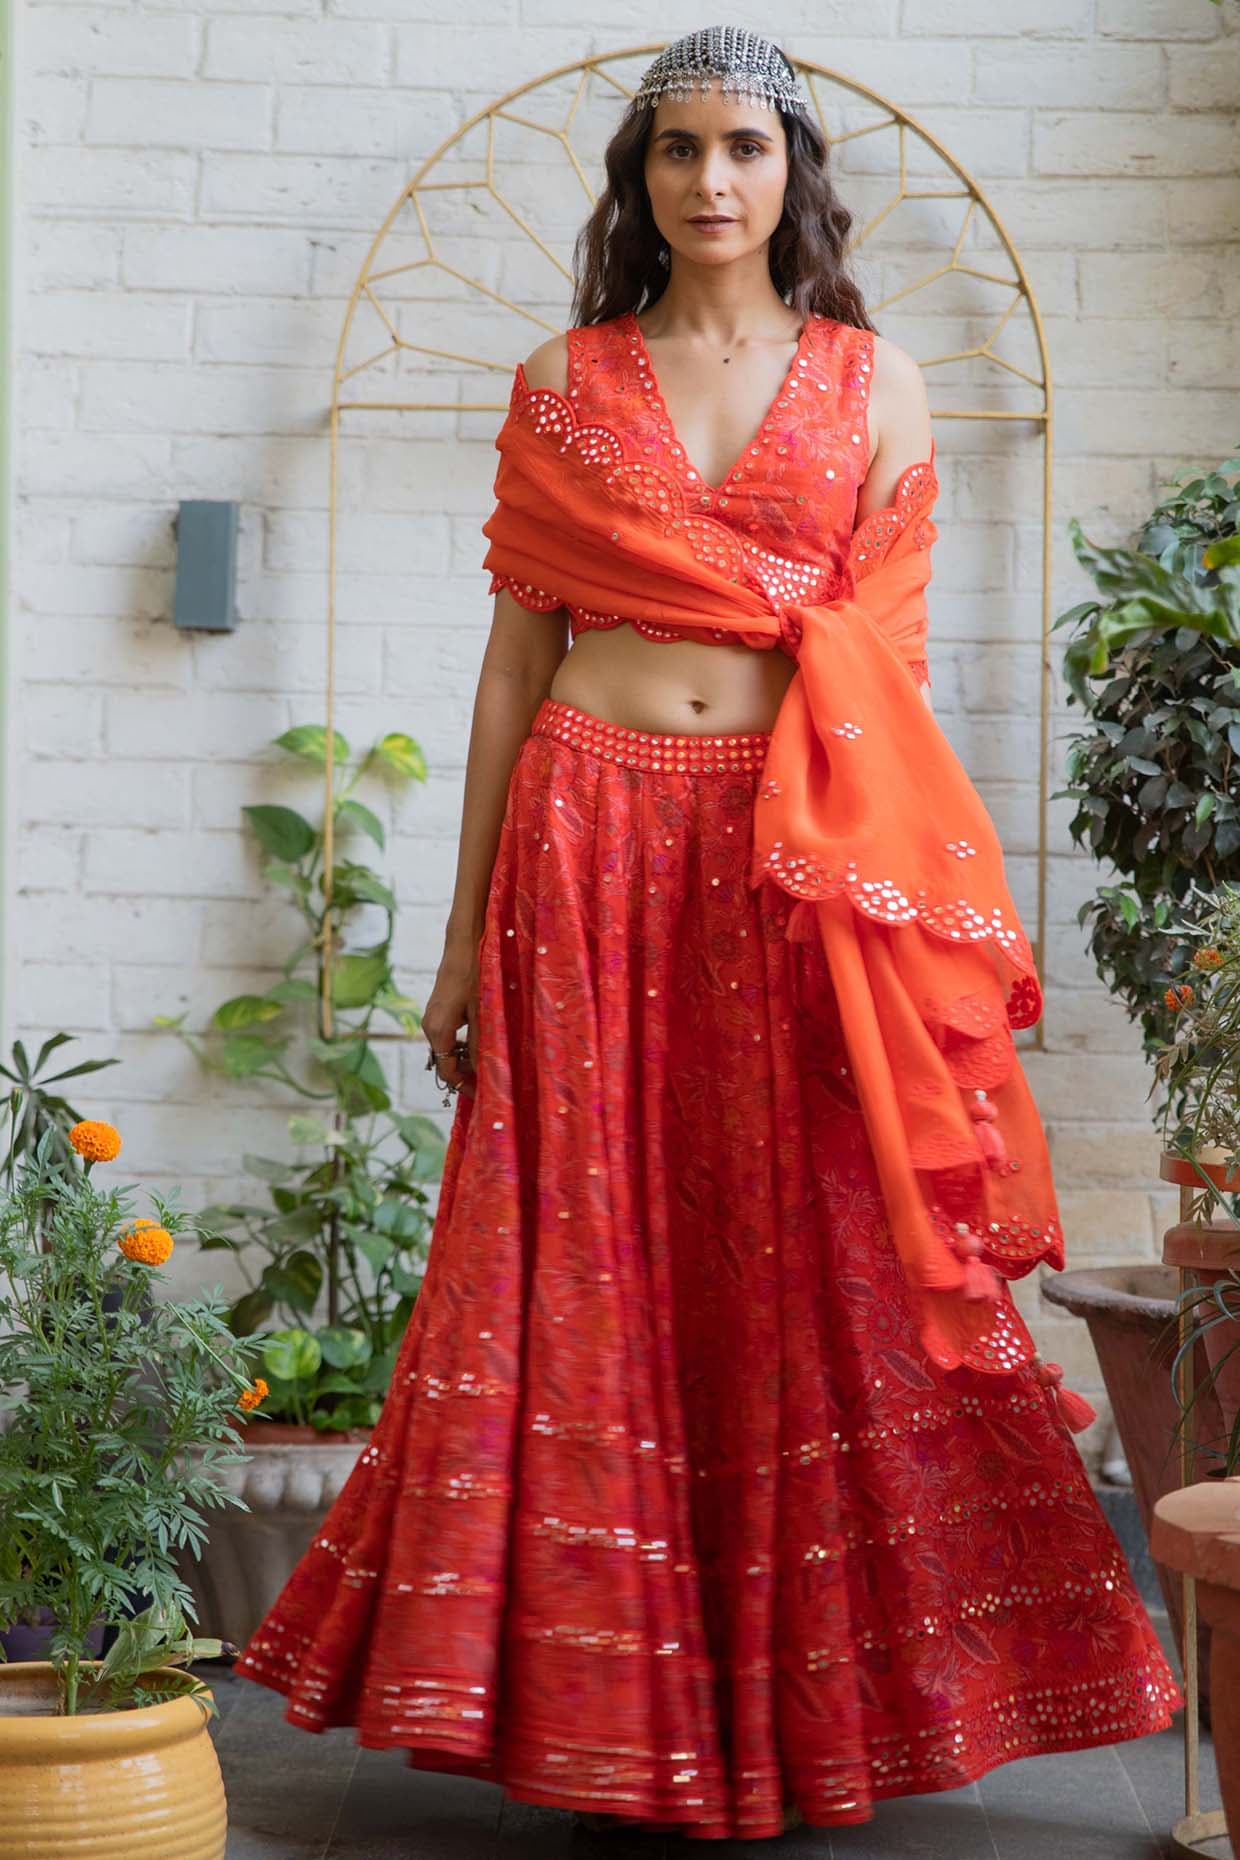 Net Lehenga Choli Dresses - Buy Net Lehenga Choli Dresses online in India